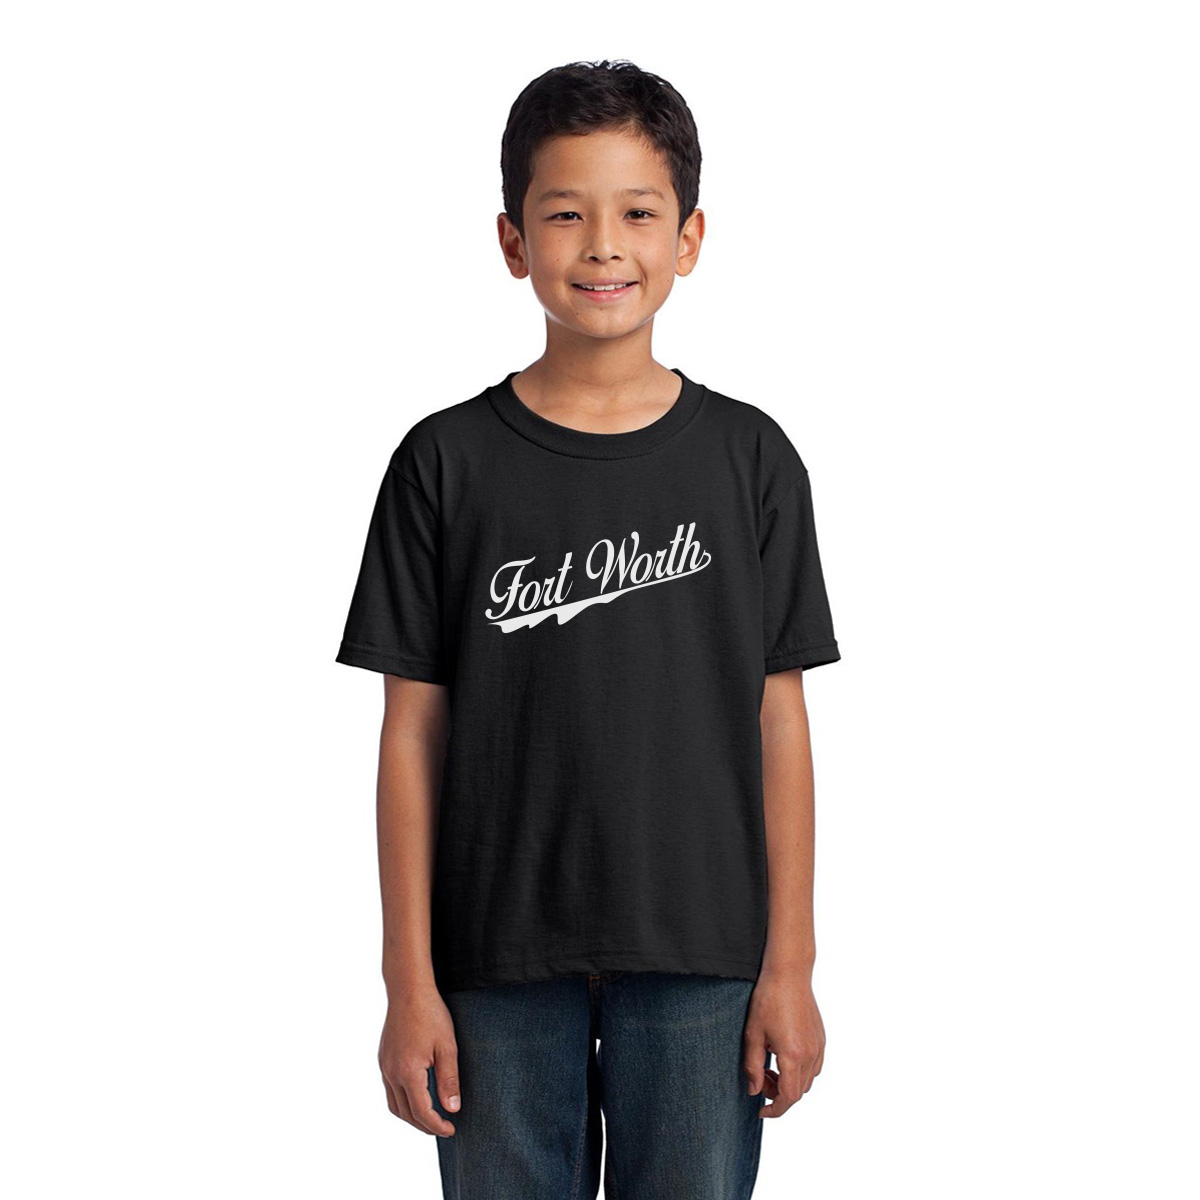 Fort Worth Kids T-shirt | Black